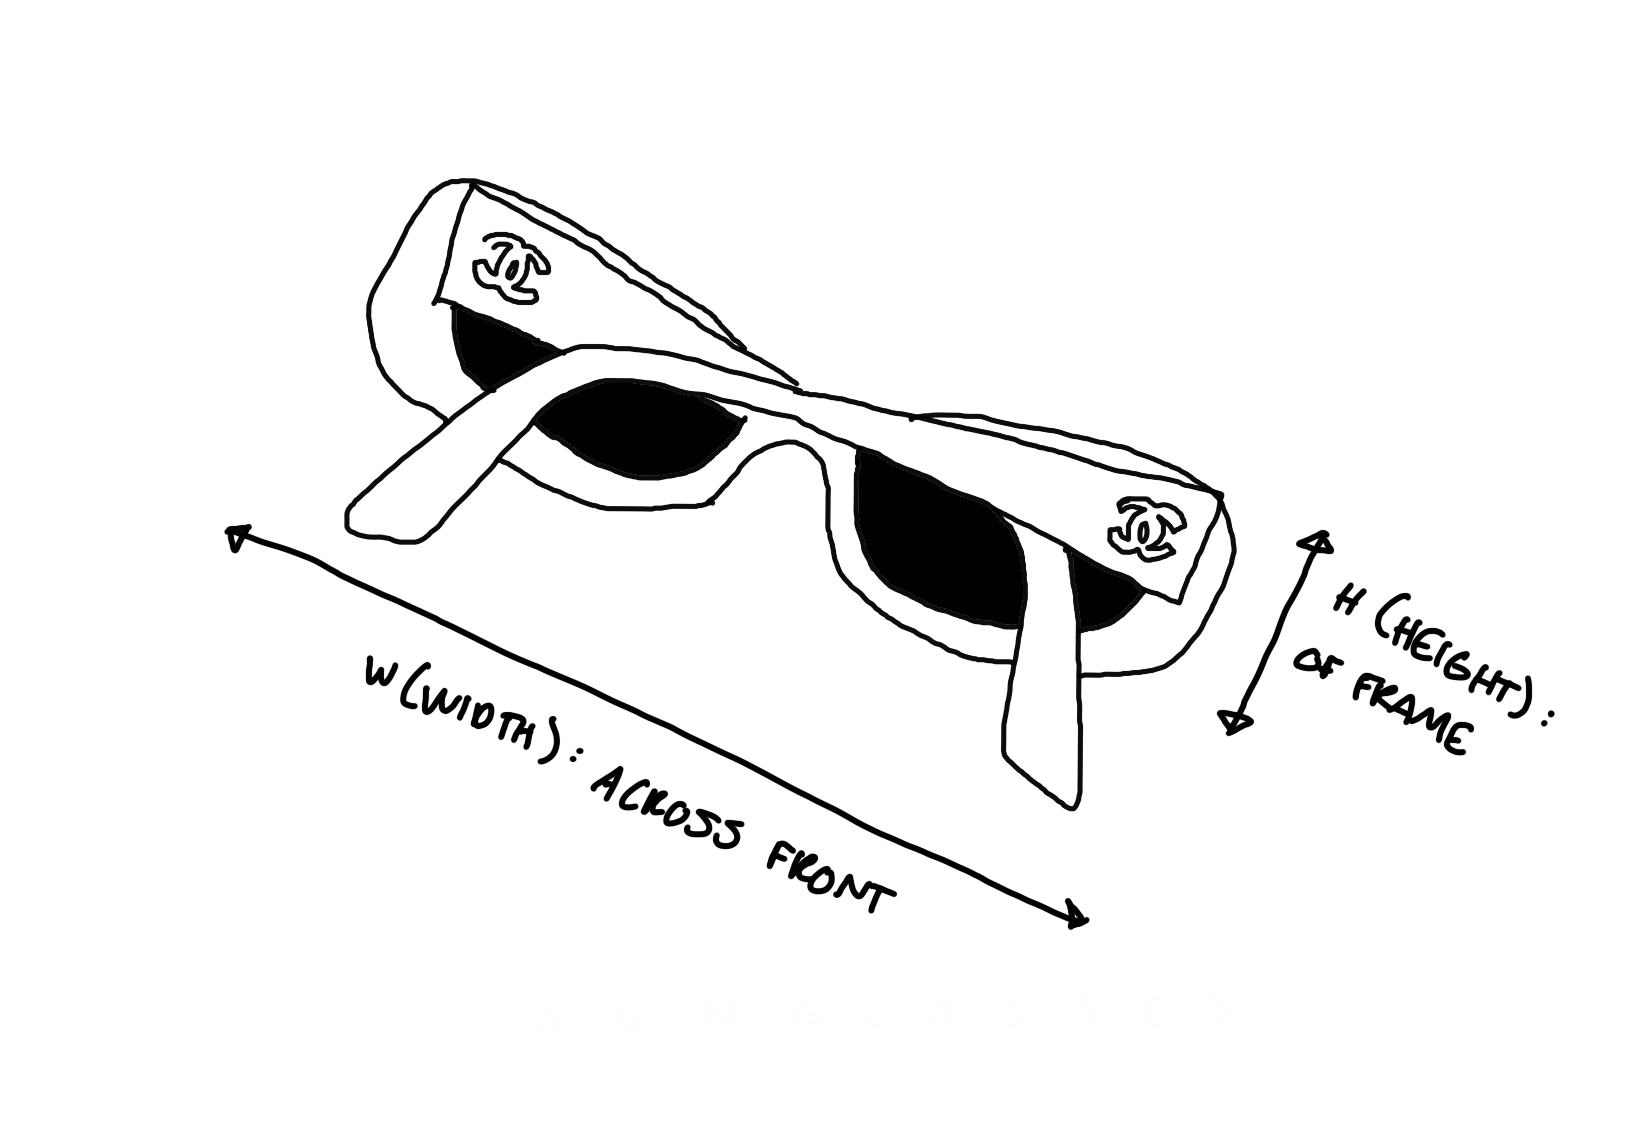 Chanel Black Rhinestone Logo Micro Sunglasses